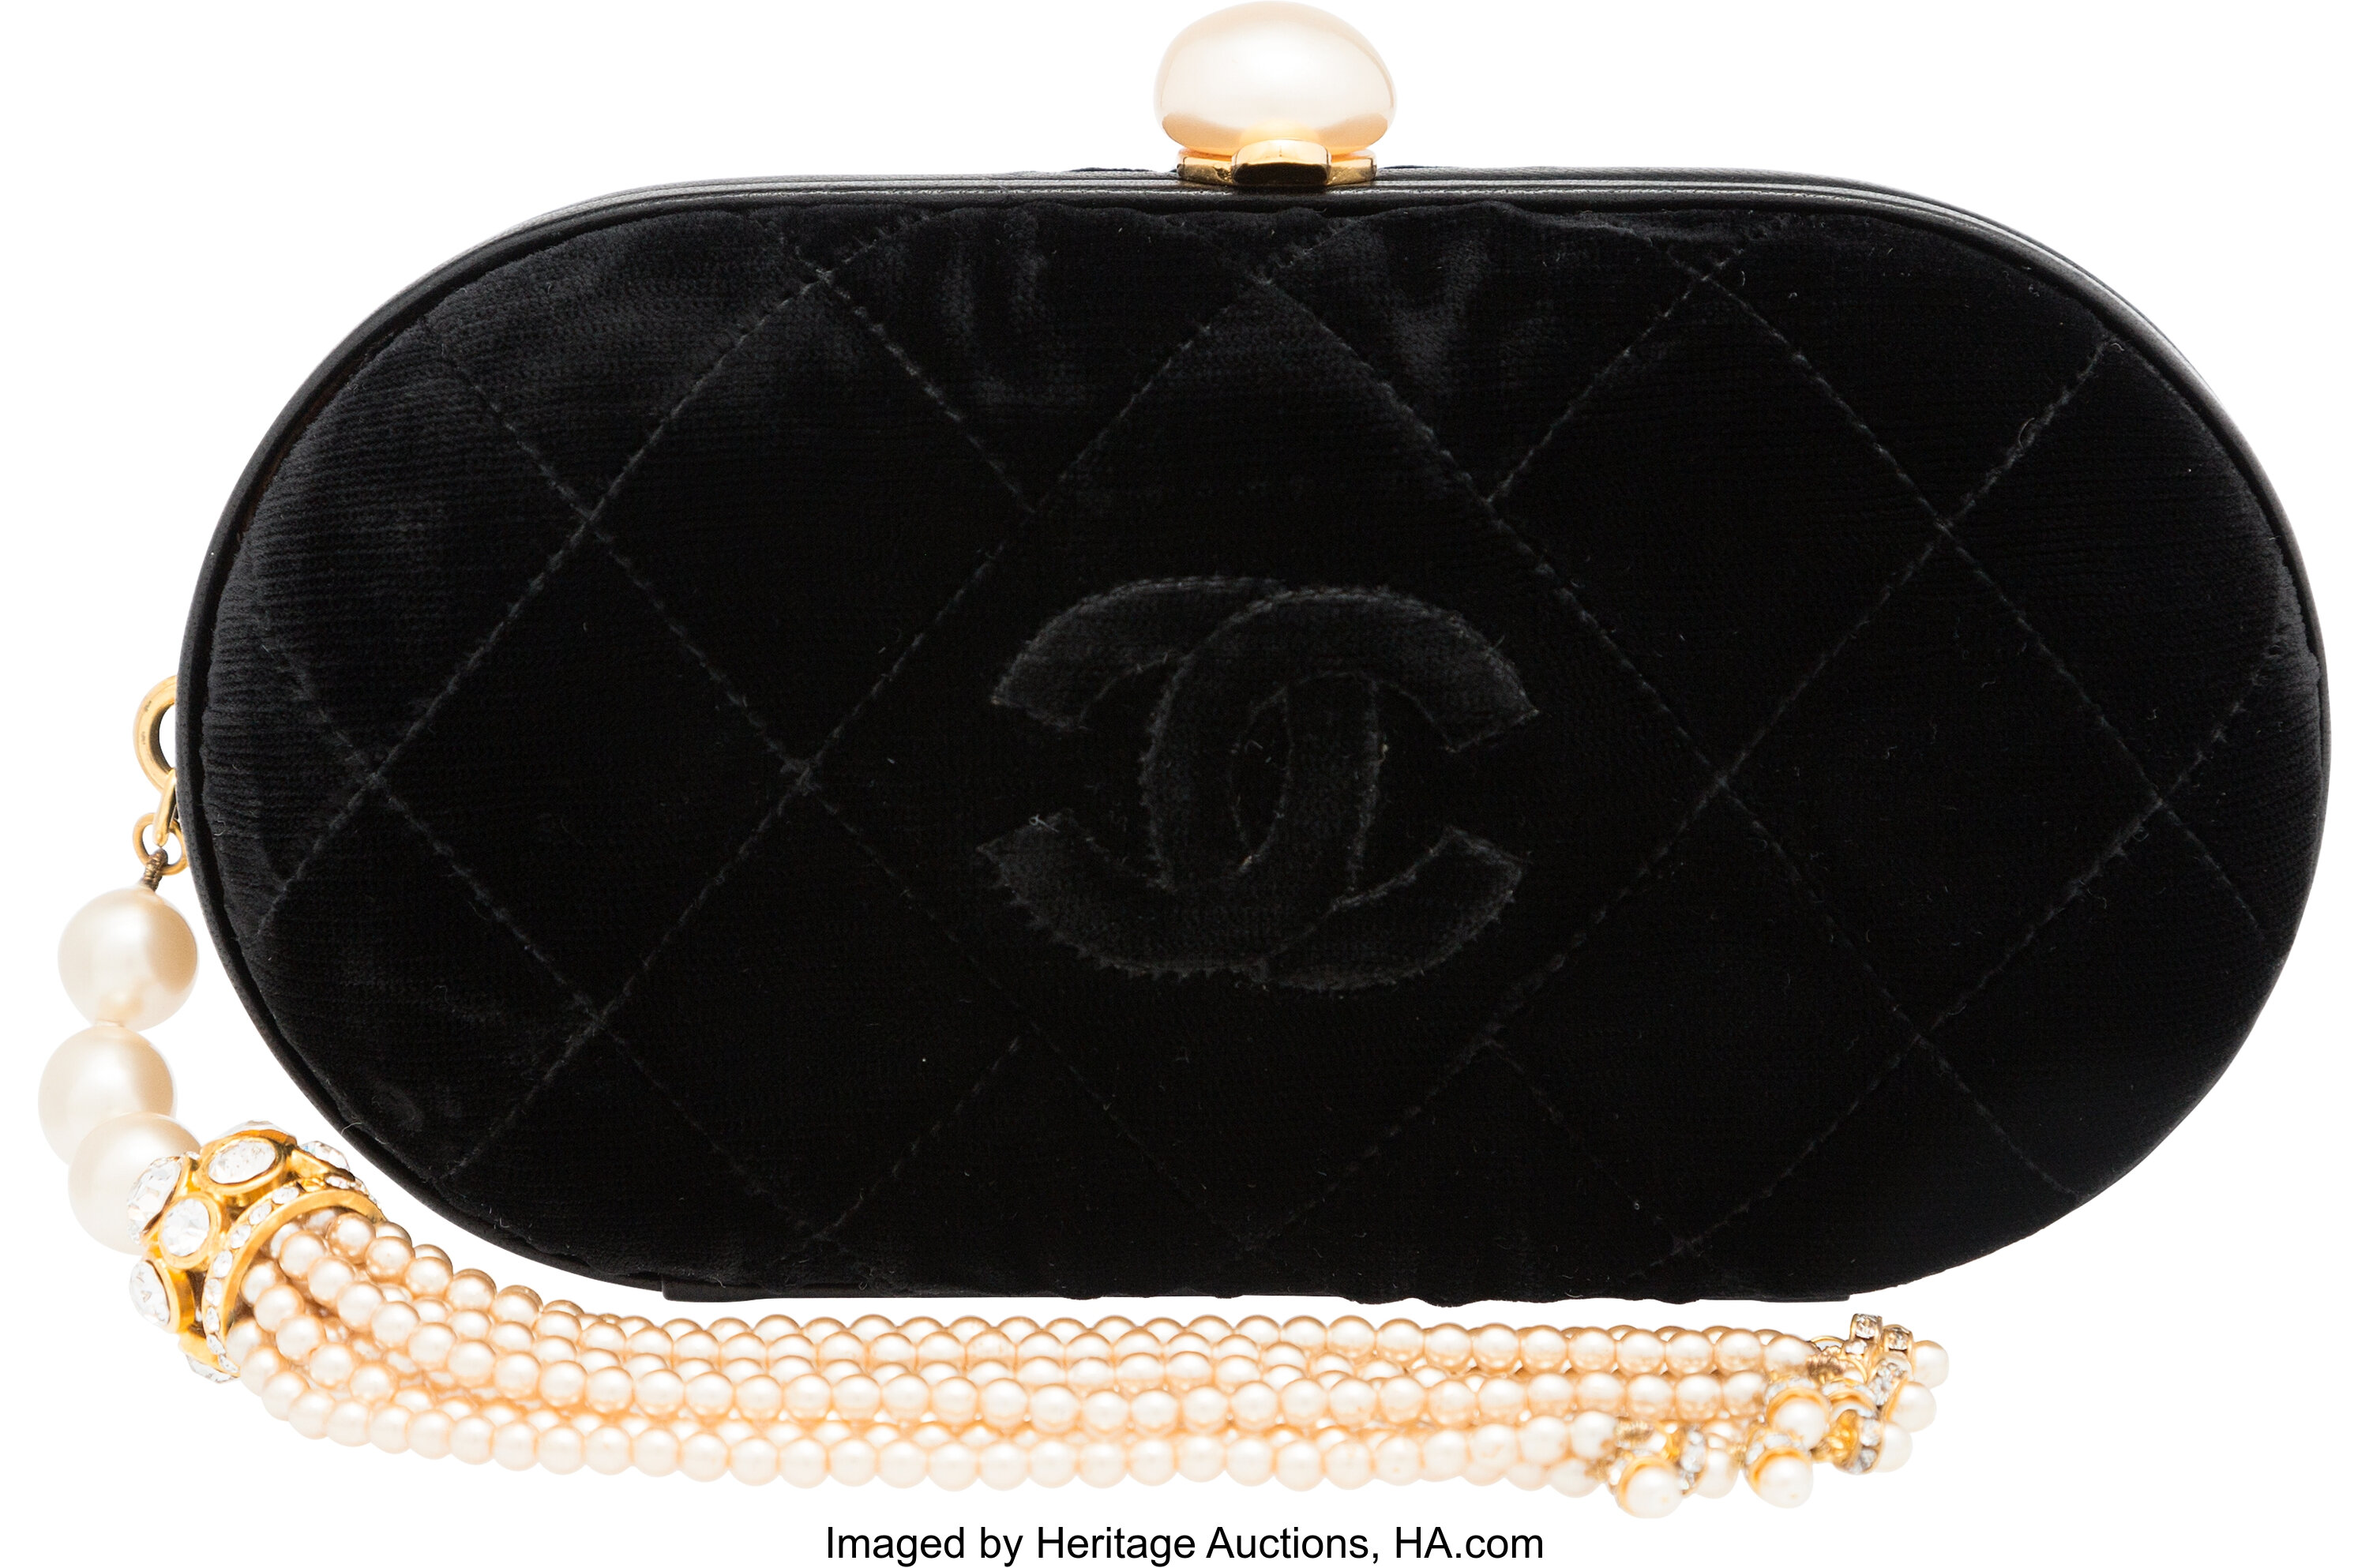 Luxury handbags make splash on auction block